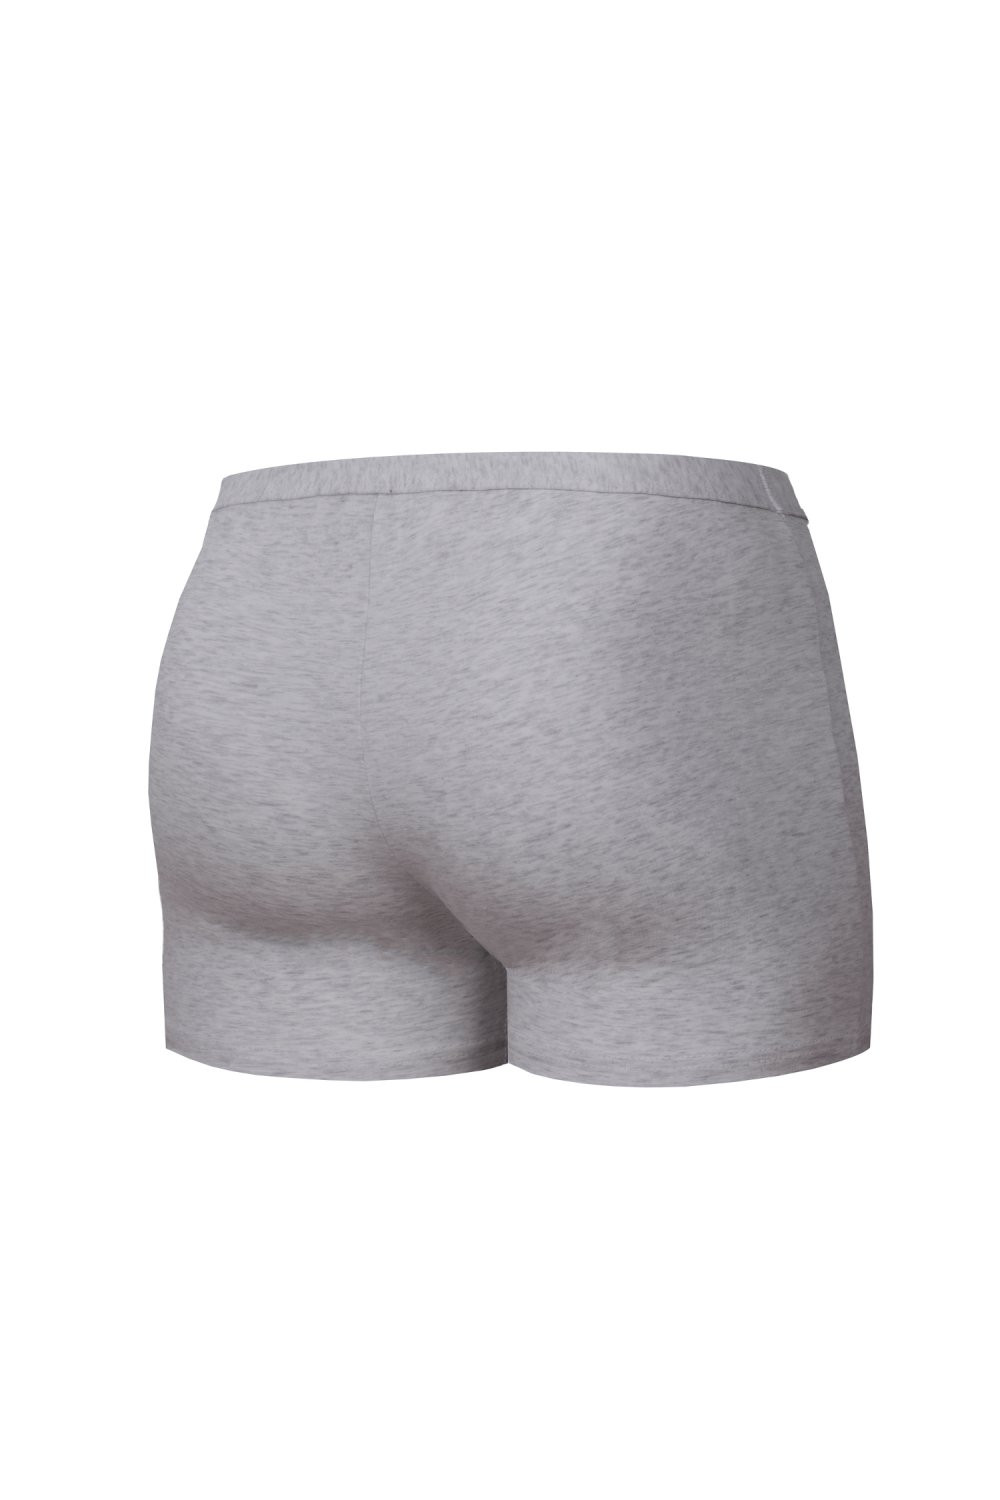 Pánské boxerky 223 Authentic mini grey - CORNETTE Barva: šedá, Velikost: M